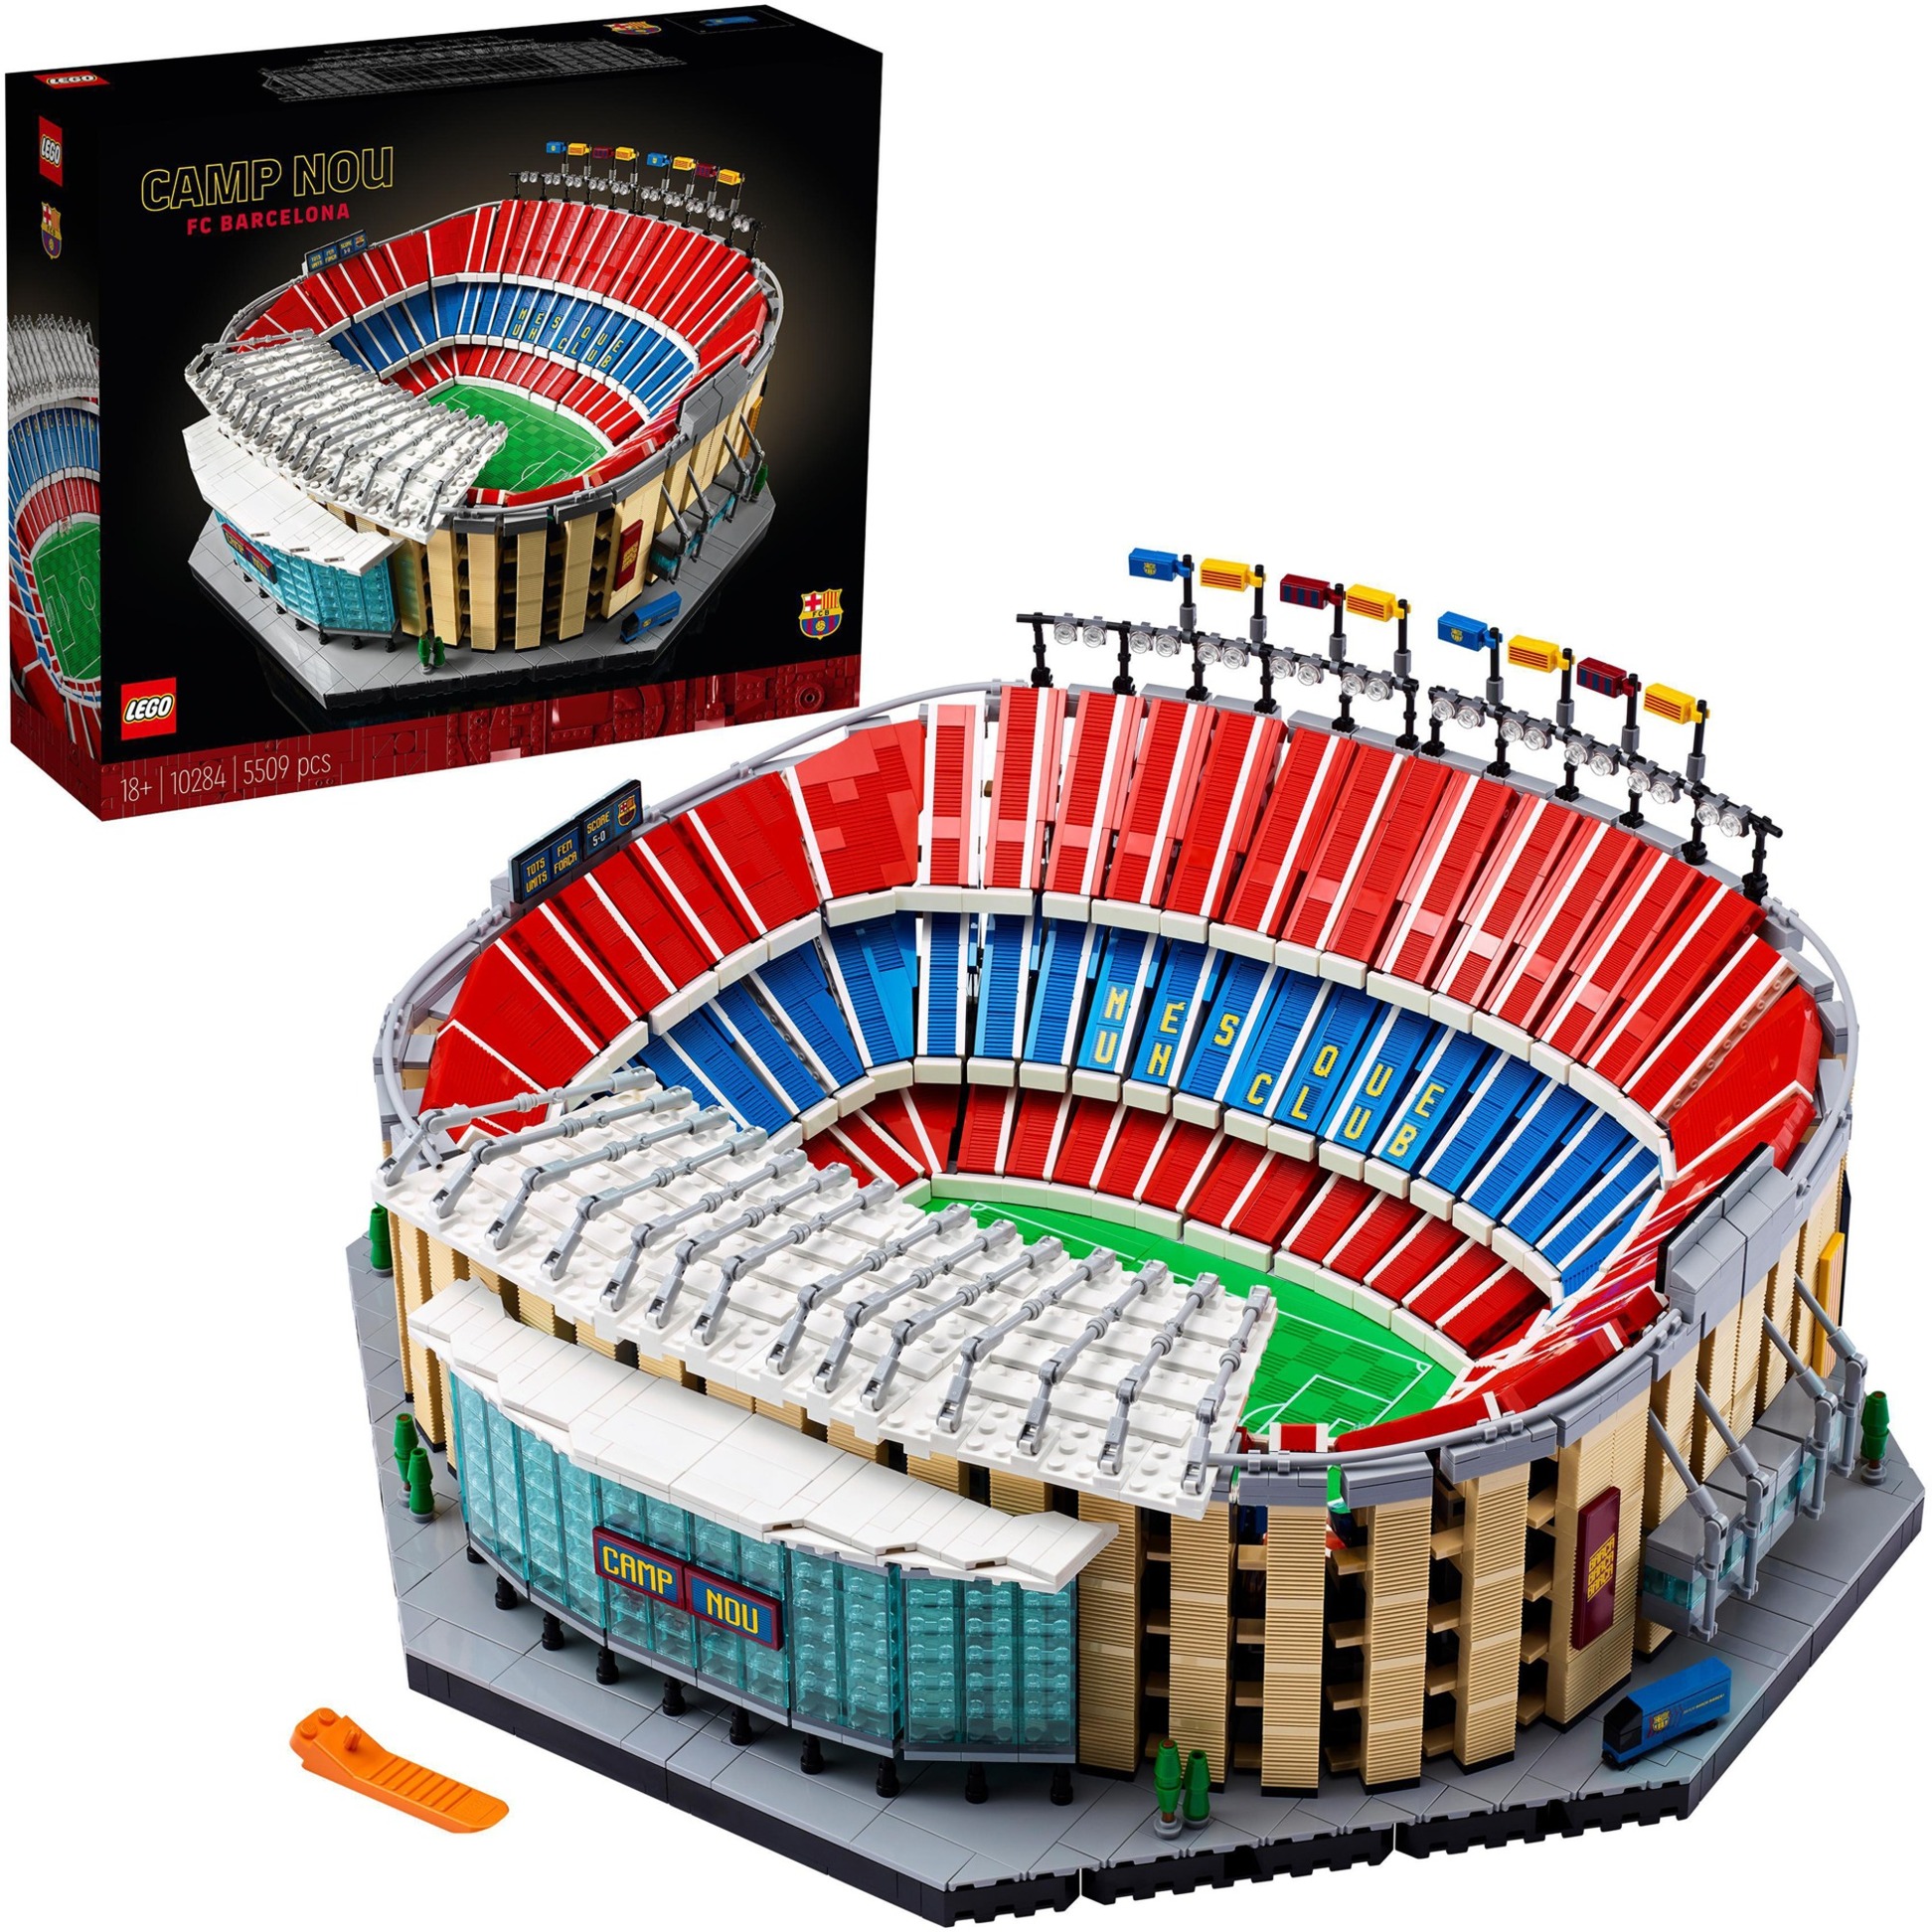 Spielzeug: Lego 10284 Creator Expert Camp Nou - FC Barcelona